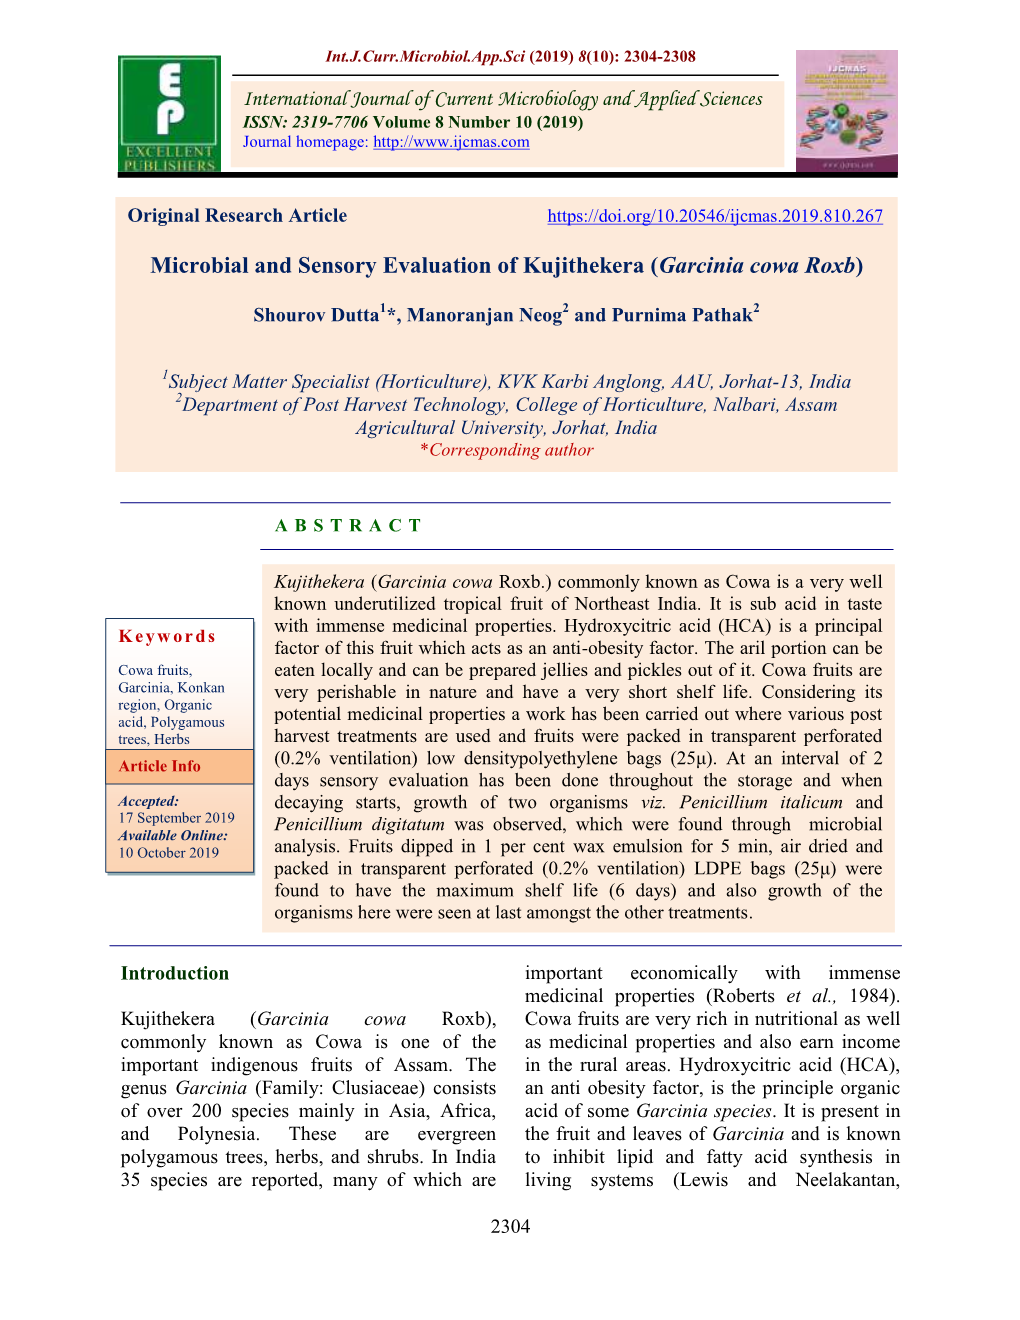 Microbial and Sensory Evaluation of Kujithekera (Garcinia Cowa Roxb)